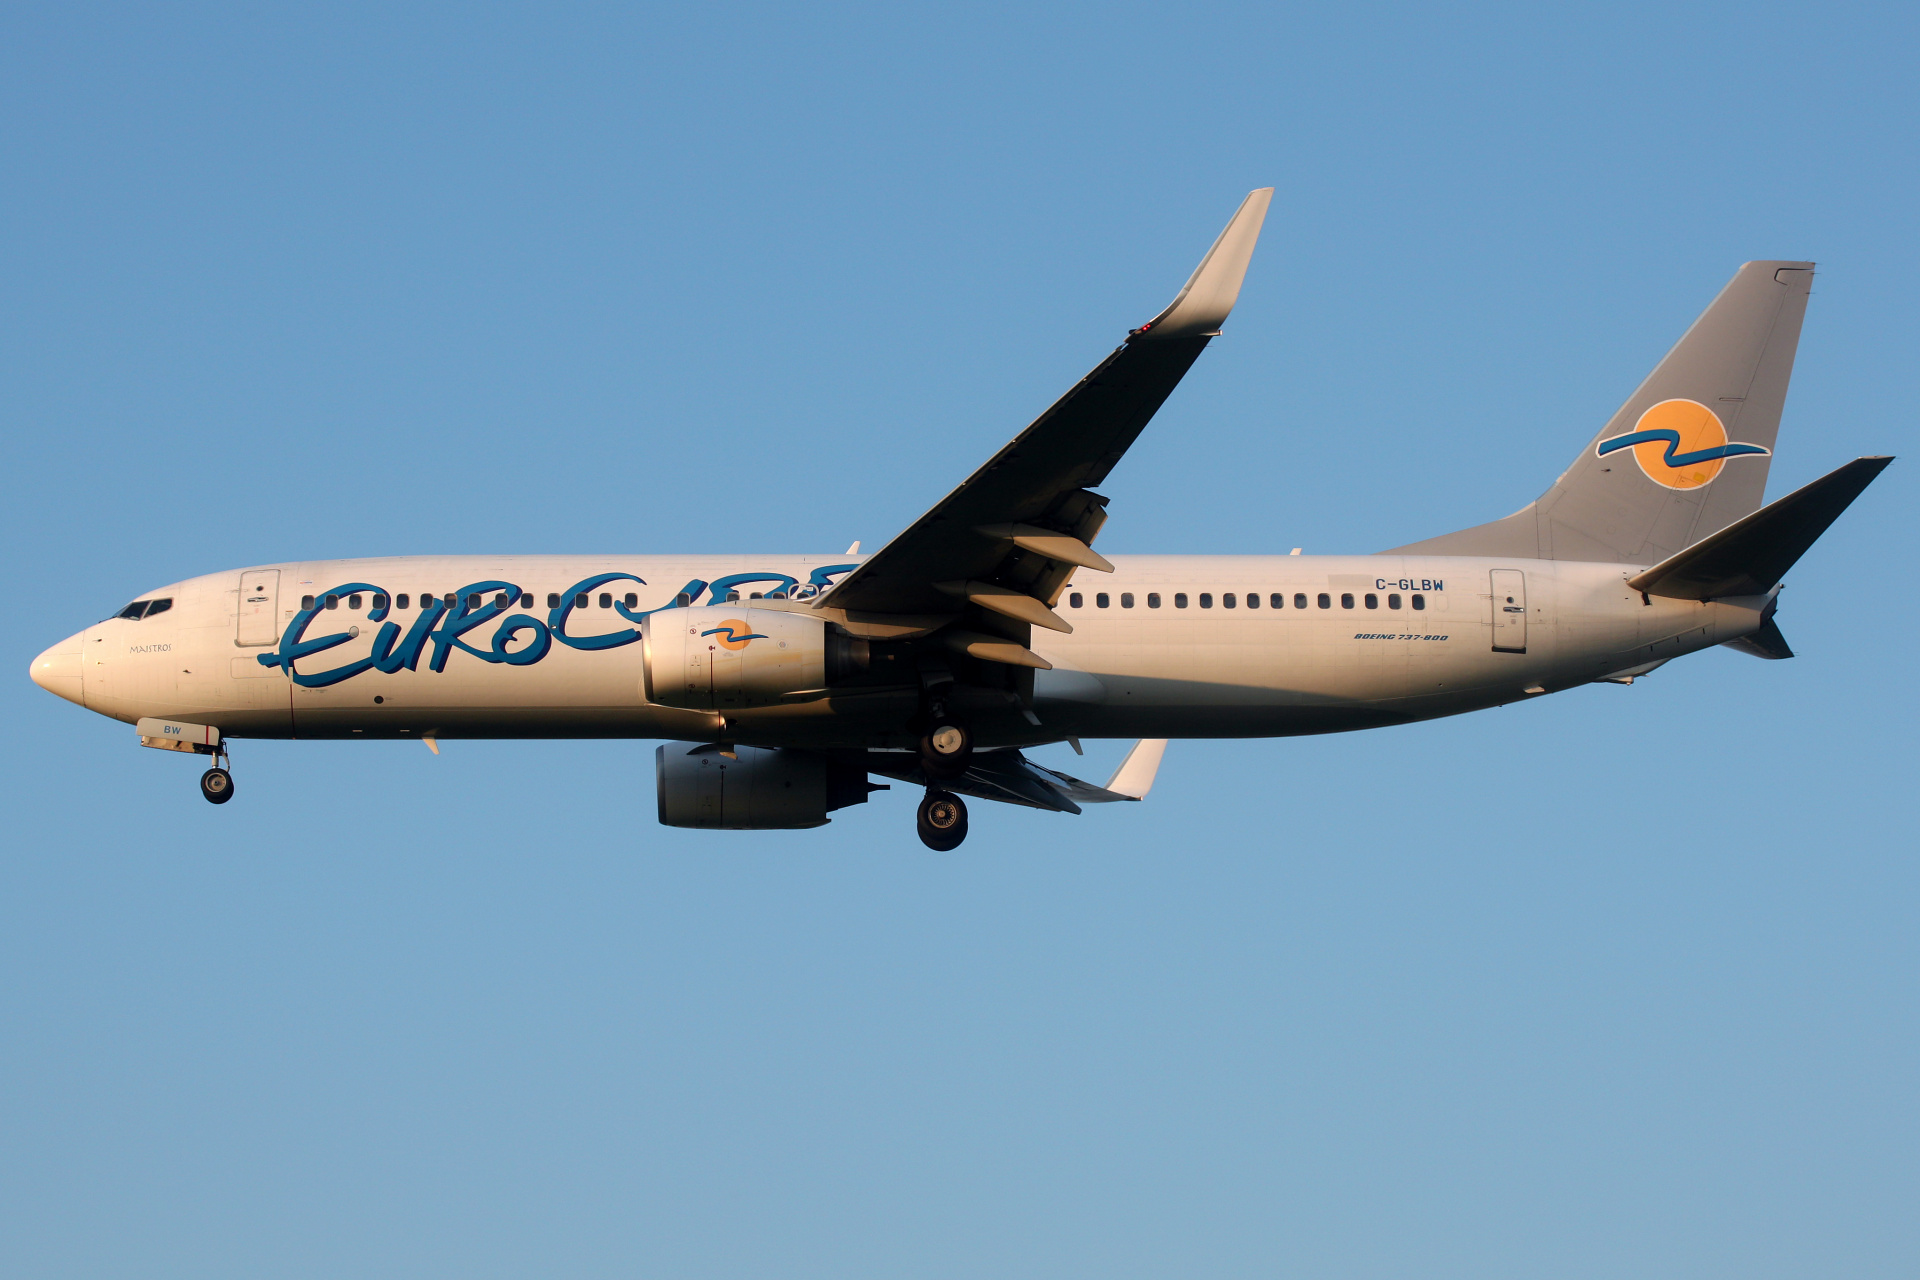 C-GLBW (Aircraft » EPWA Spotting » Boeing 737-800 » Eurocypria)